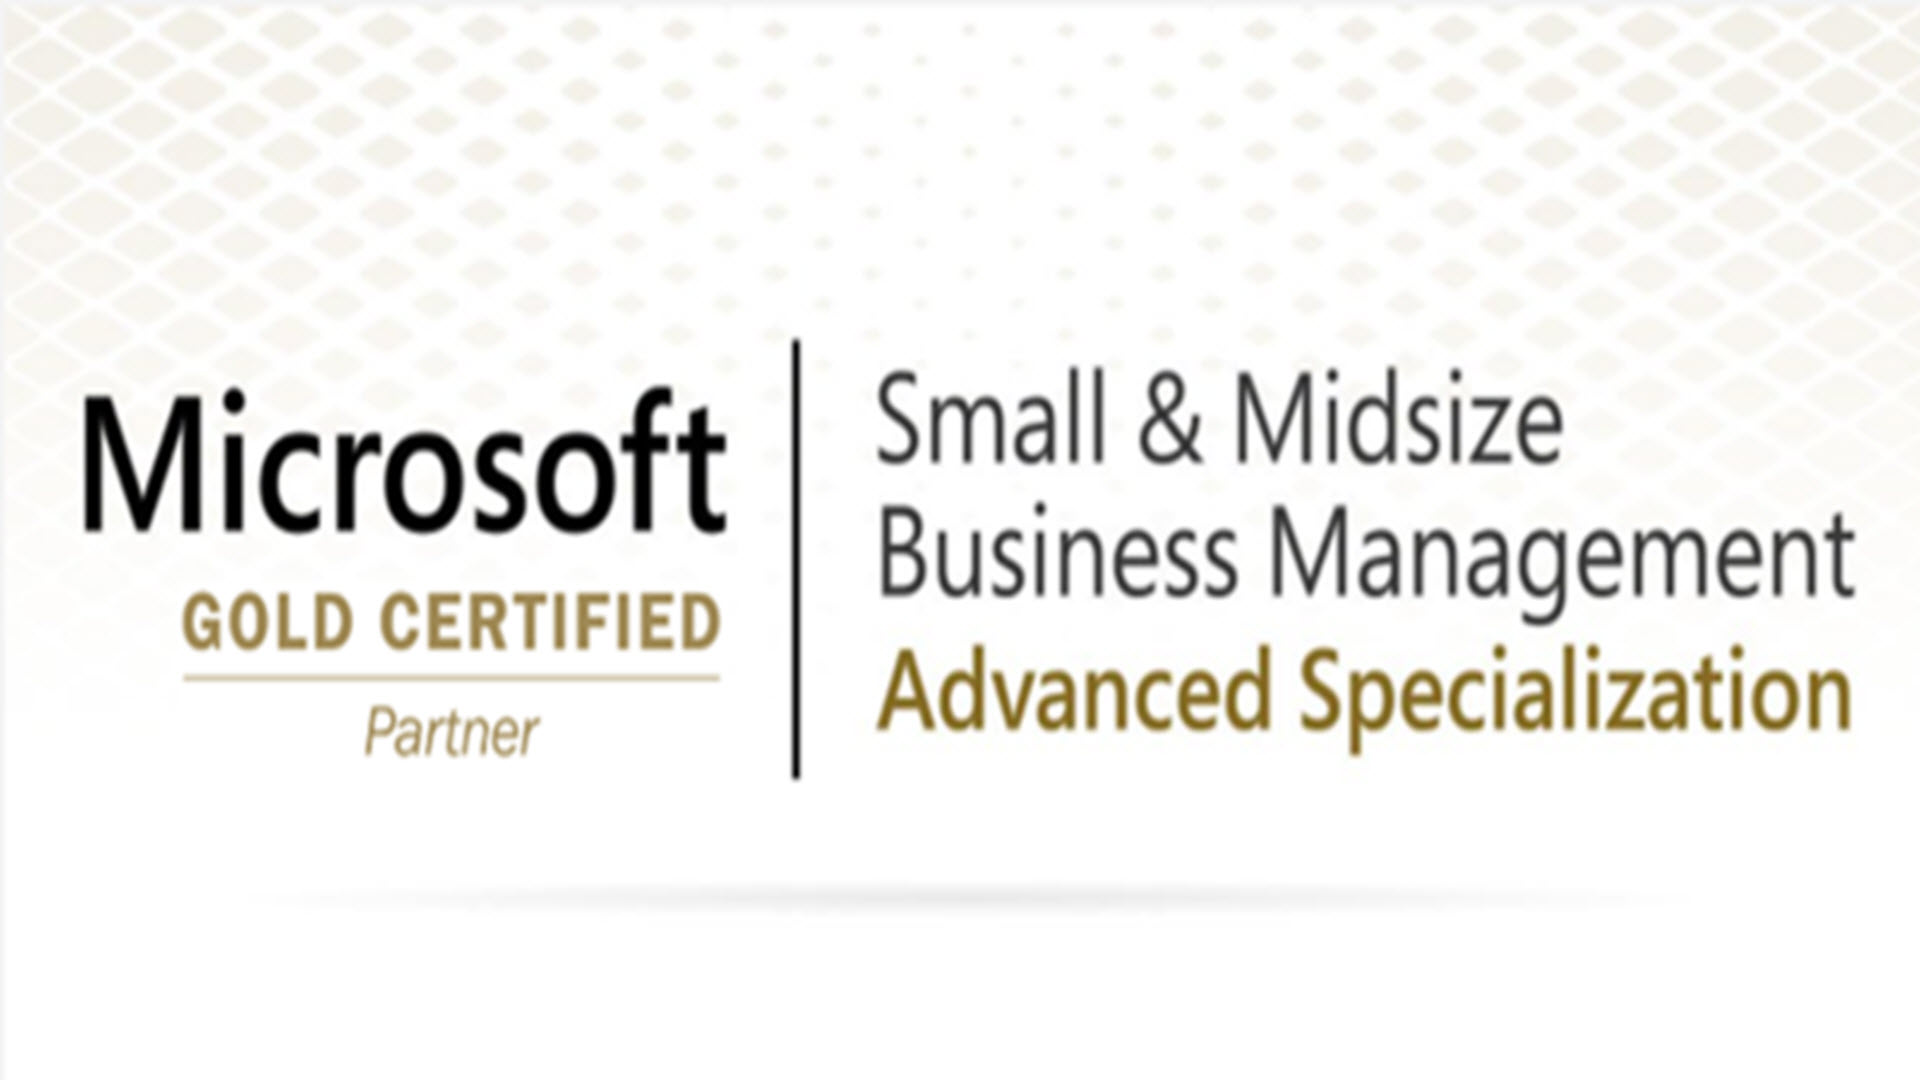 Microsoft SMB Adv Spec 1920X1080px